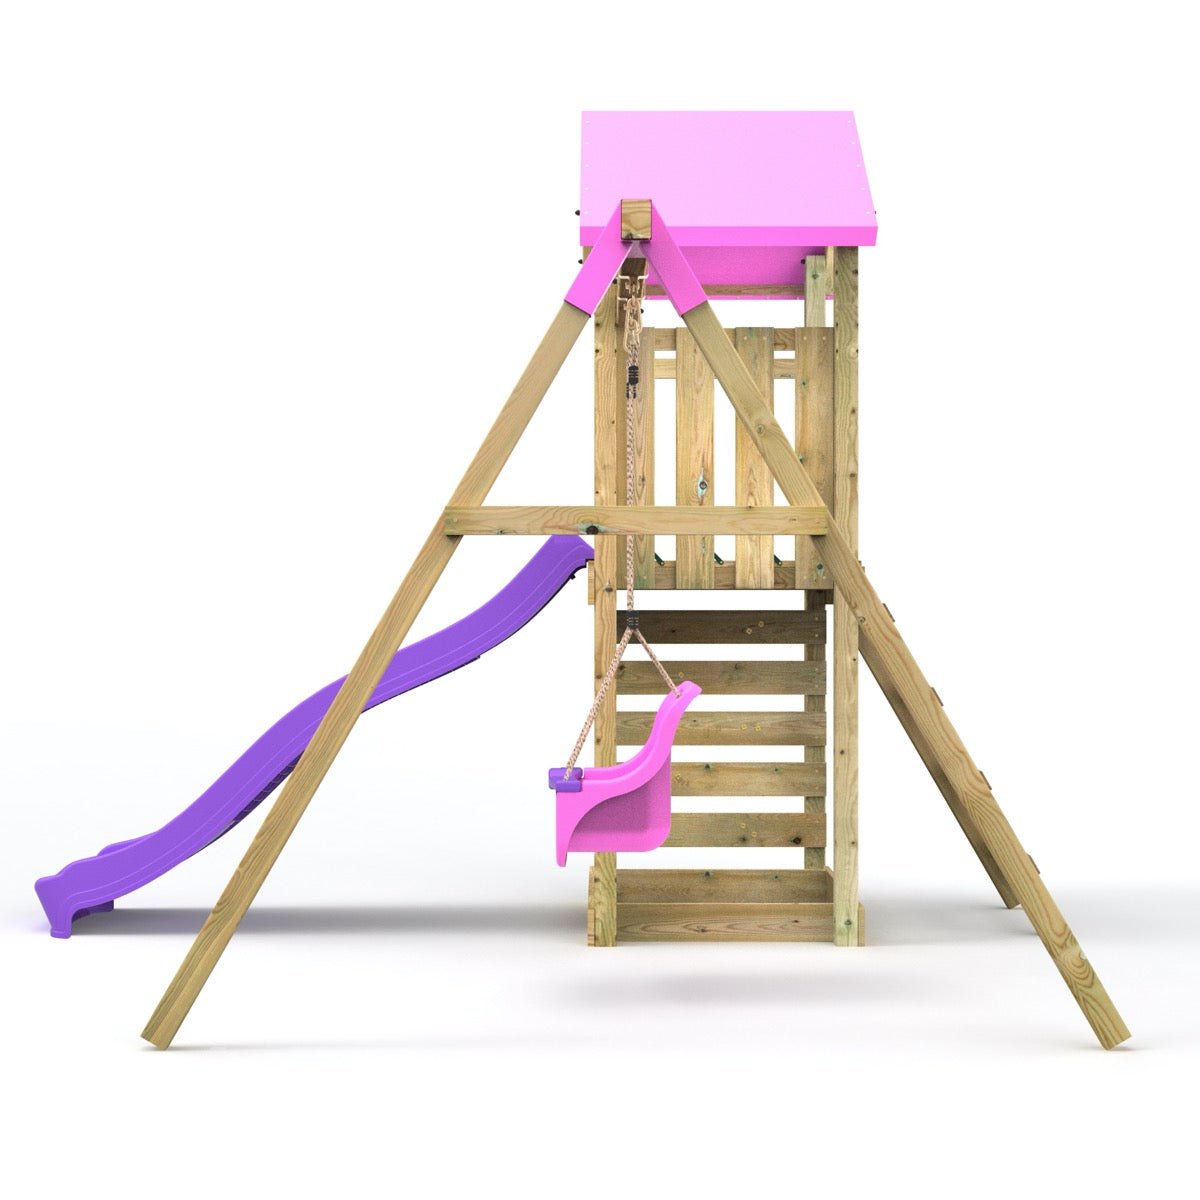 Rebo Adventure Wooden Climbing Frame, Swing Set and Slide - Rosa Pink